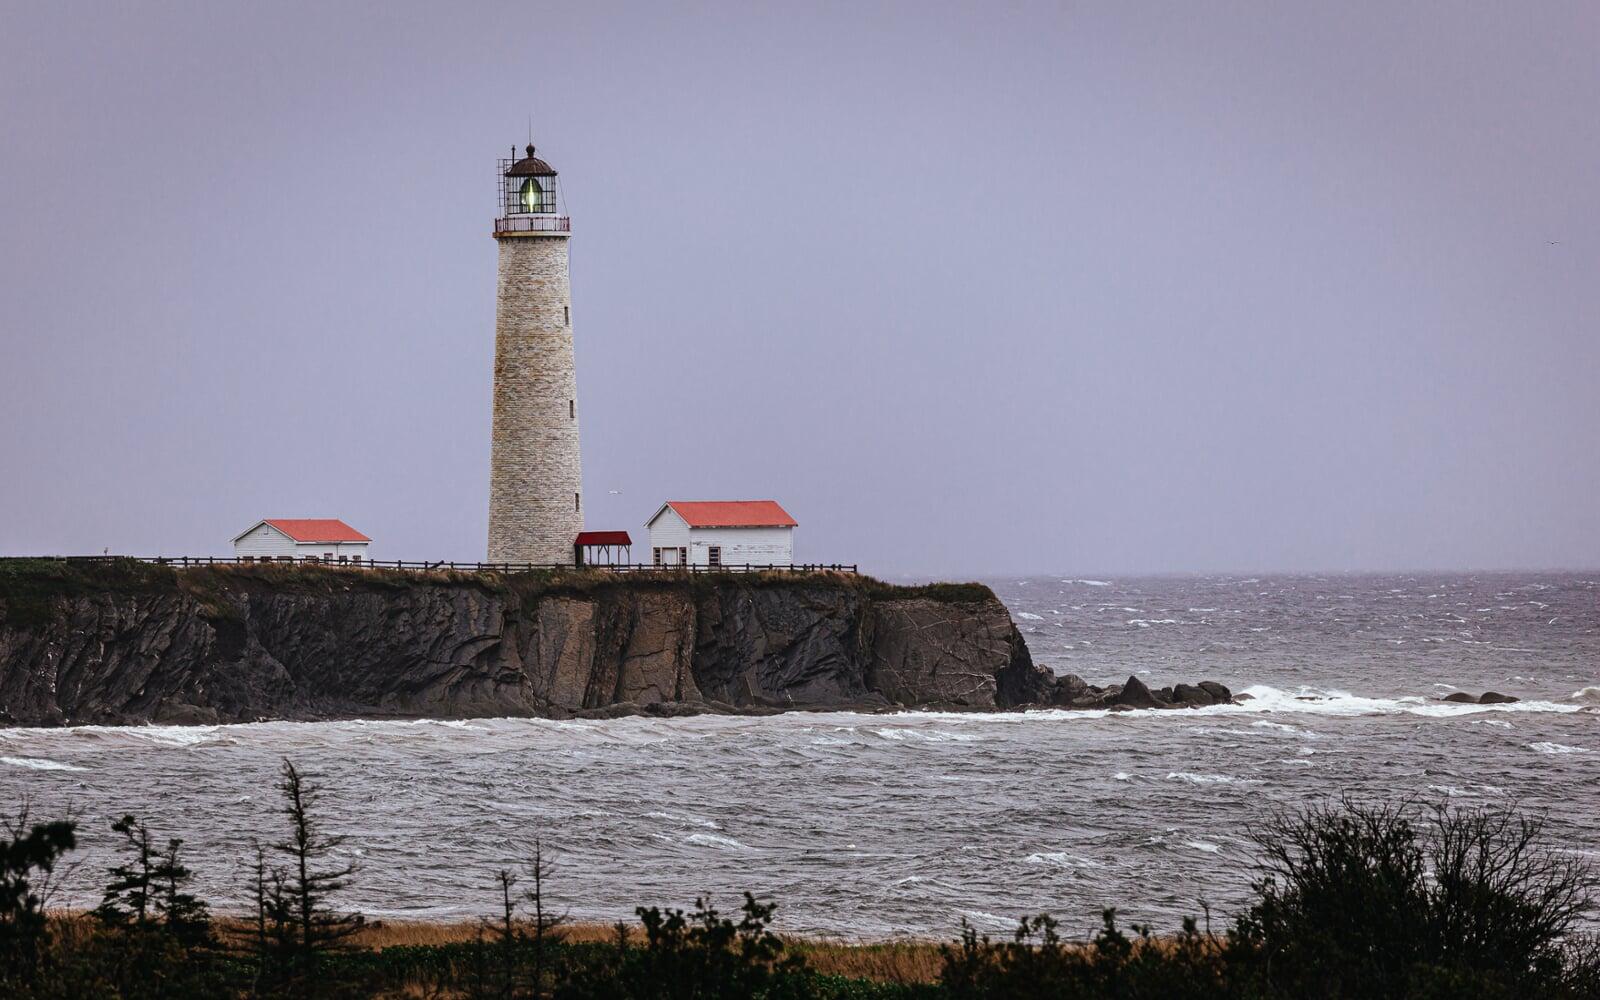 Cap-des-Rosiers Lighthouse in Gaspesie, Quebec, Canada